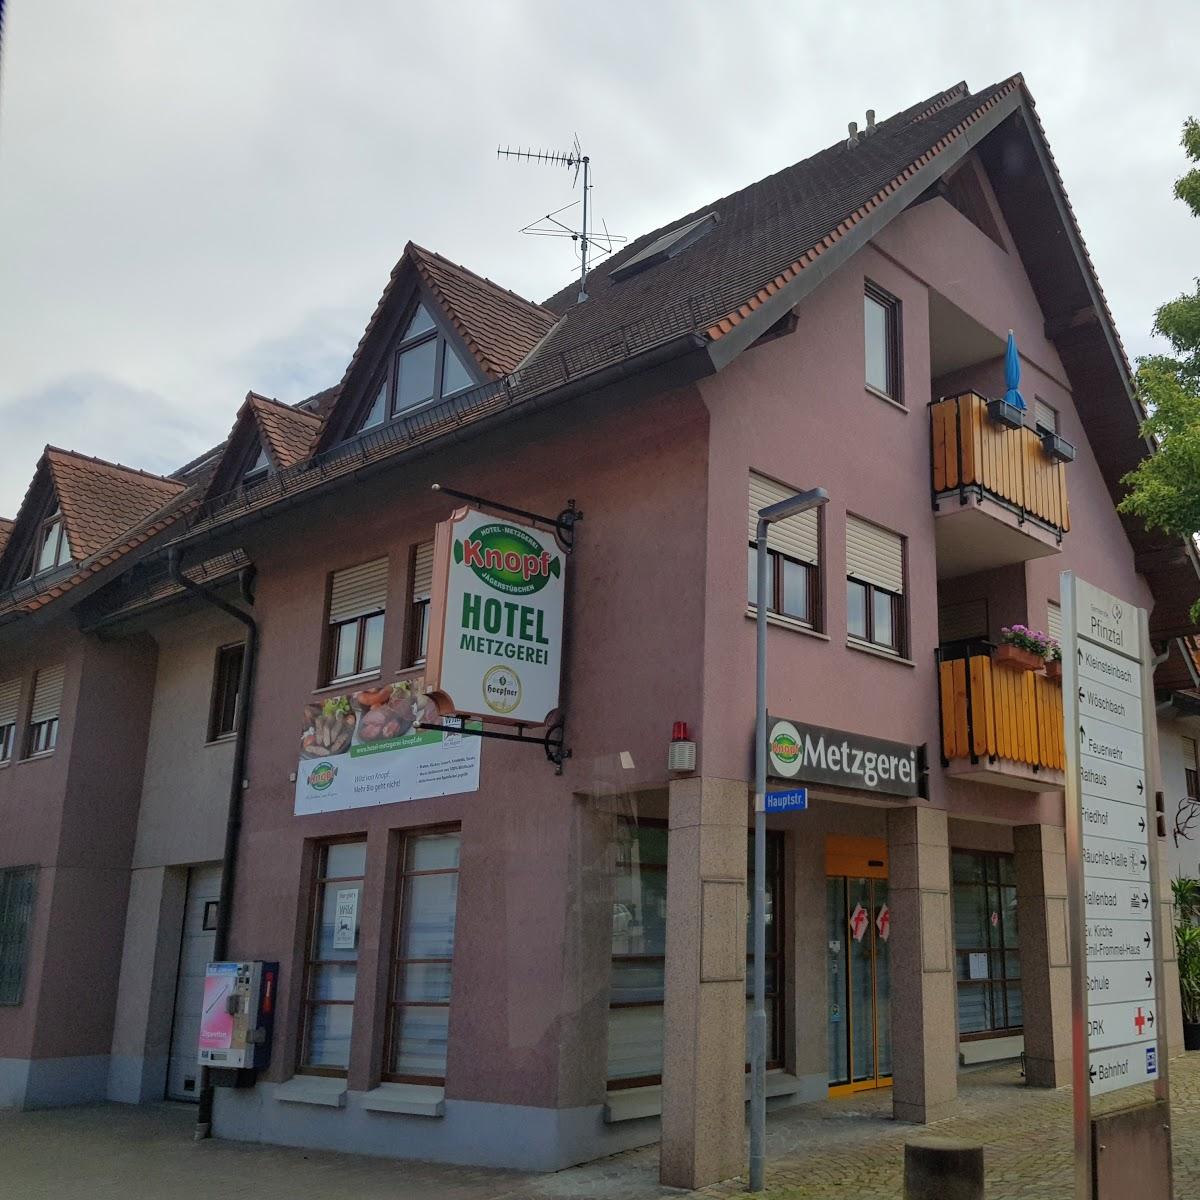 Restaurant "Hotel-Metzgerei Knopf" in Pfinztal